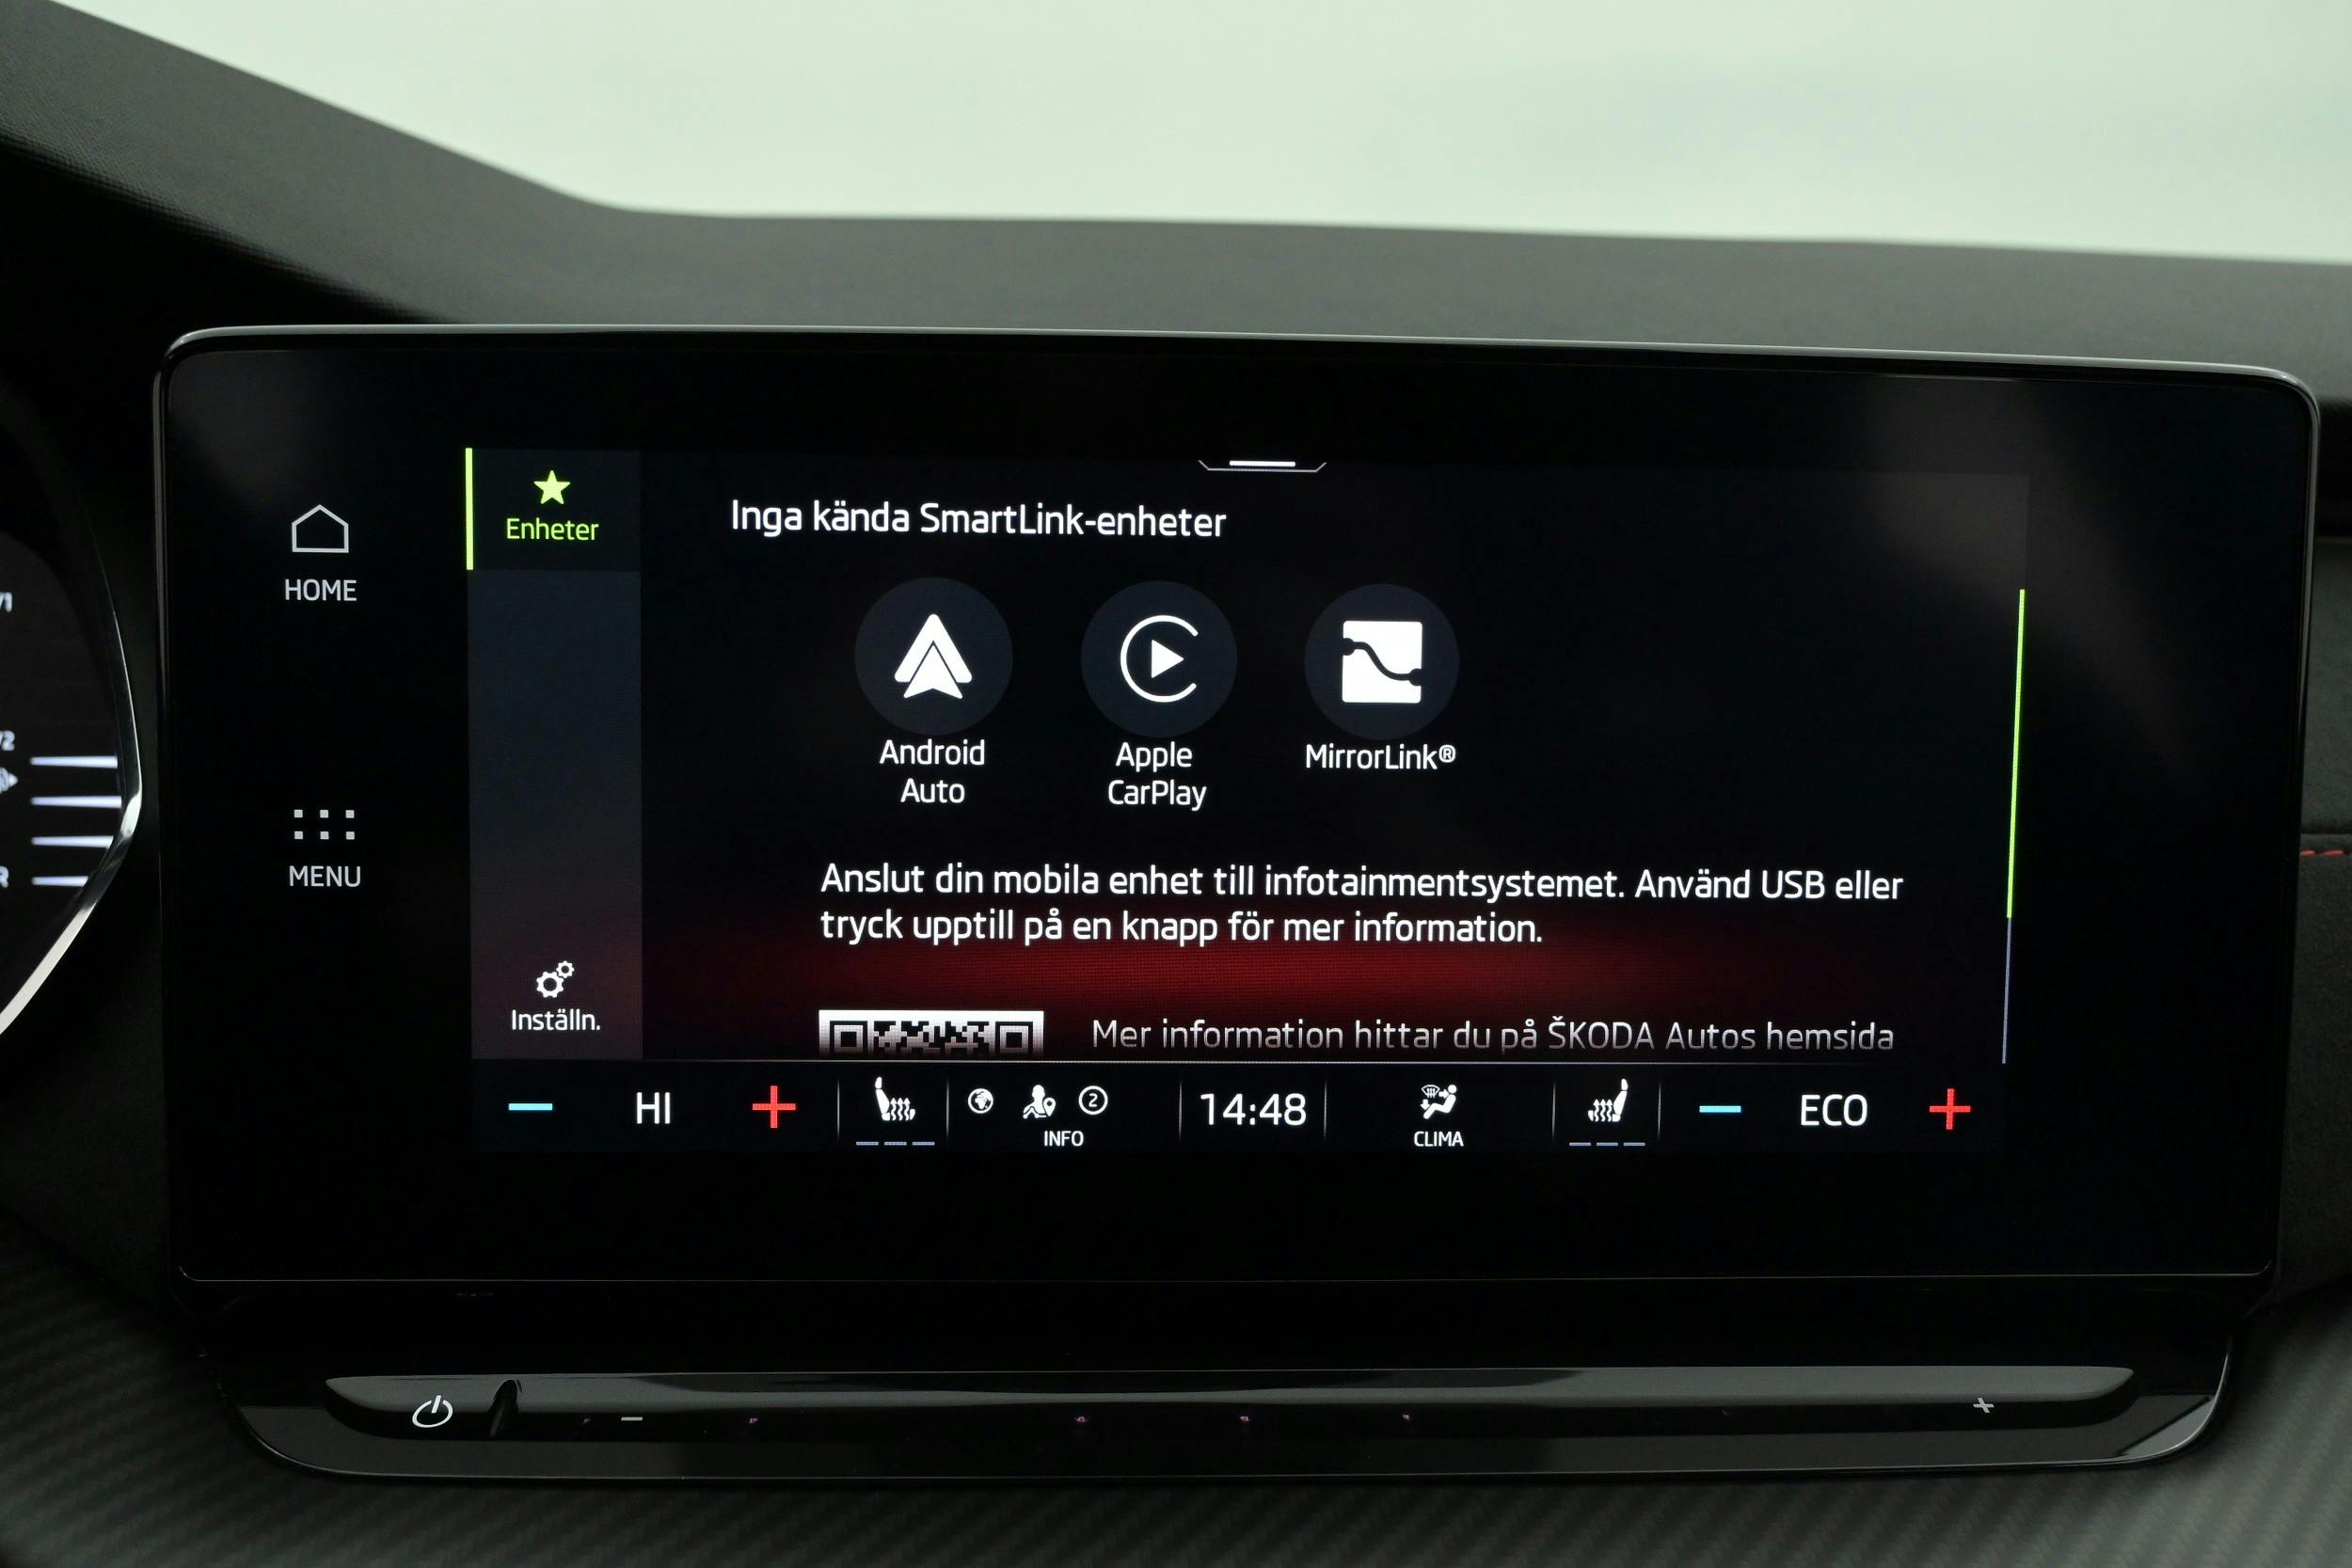 Infotainmentsystem - Android Auto, Apple CarPlay, MirrorLink